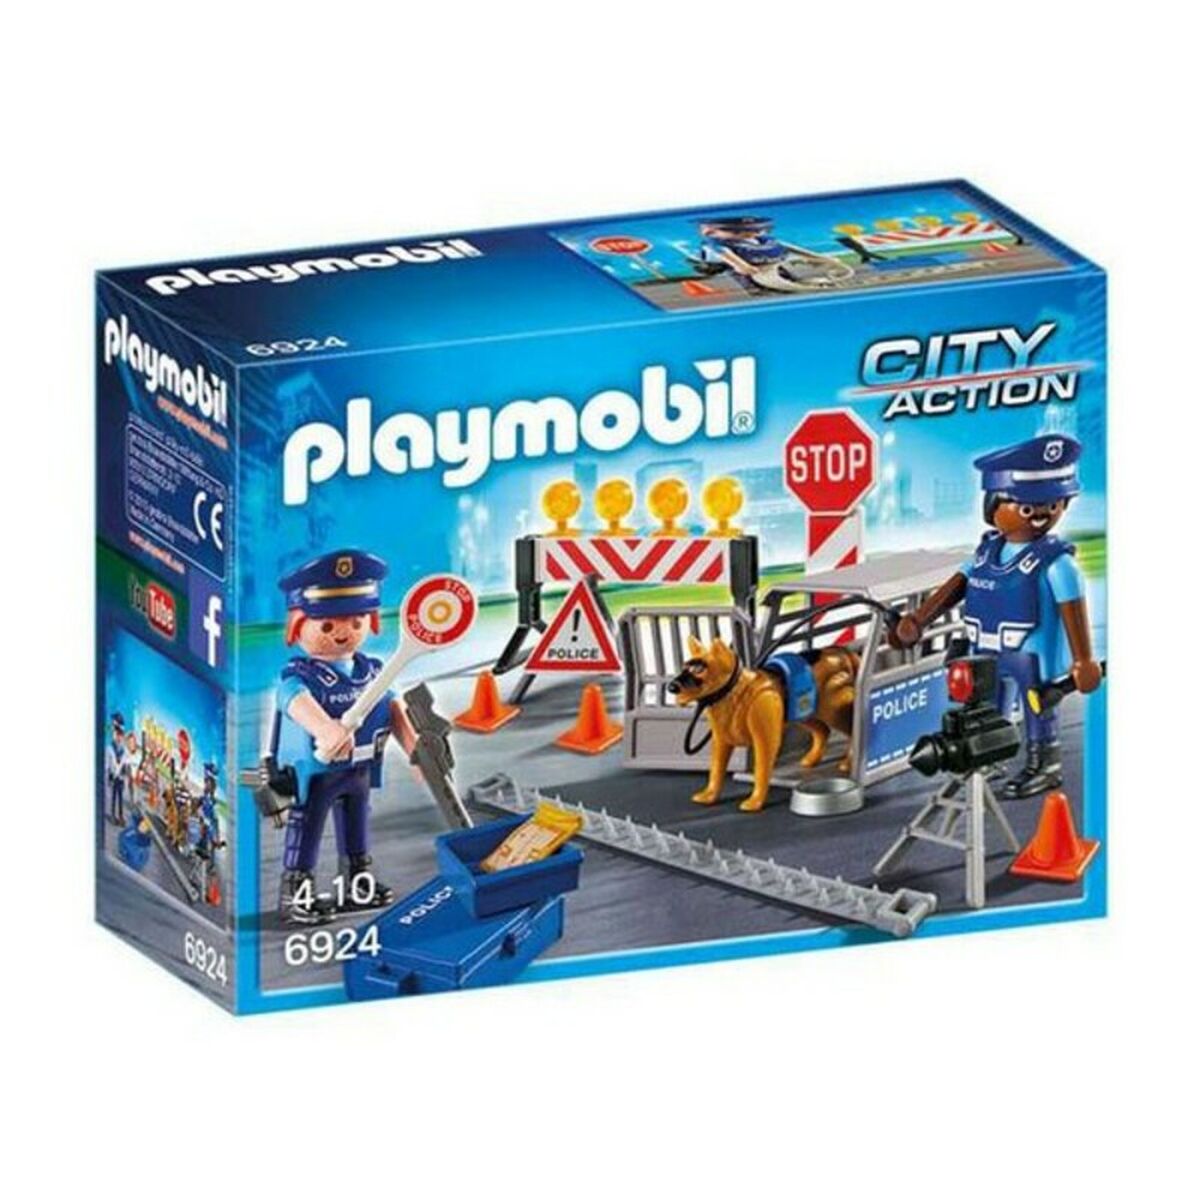 Playset City Action Police Playmobil 6924 - Disponibile in 3-4 giorni lavorativi